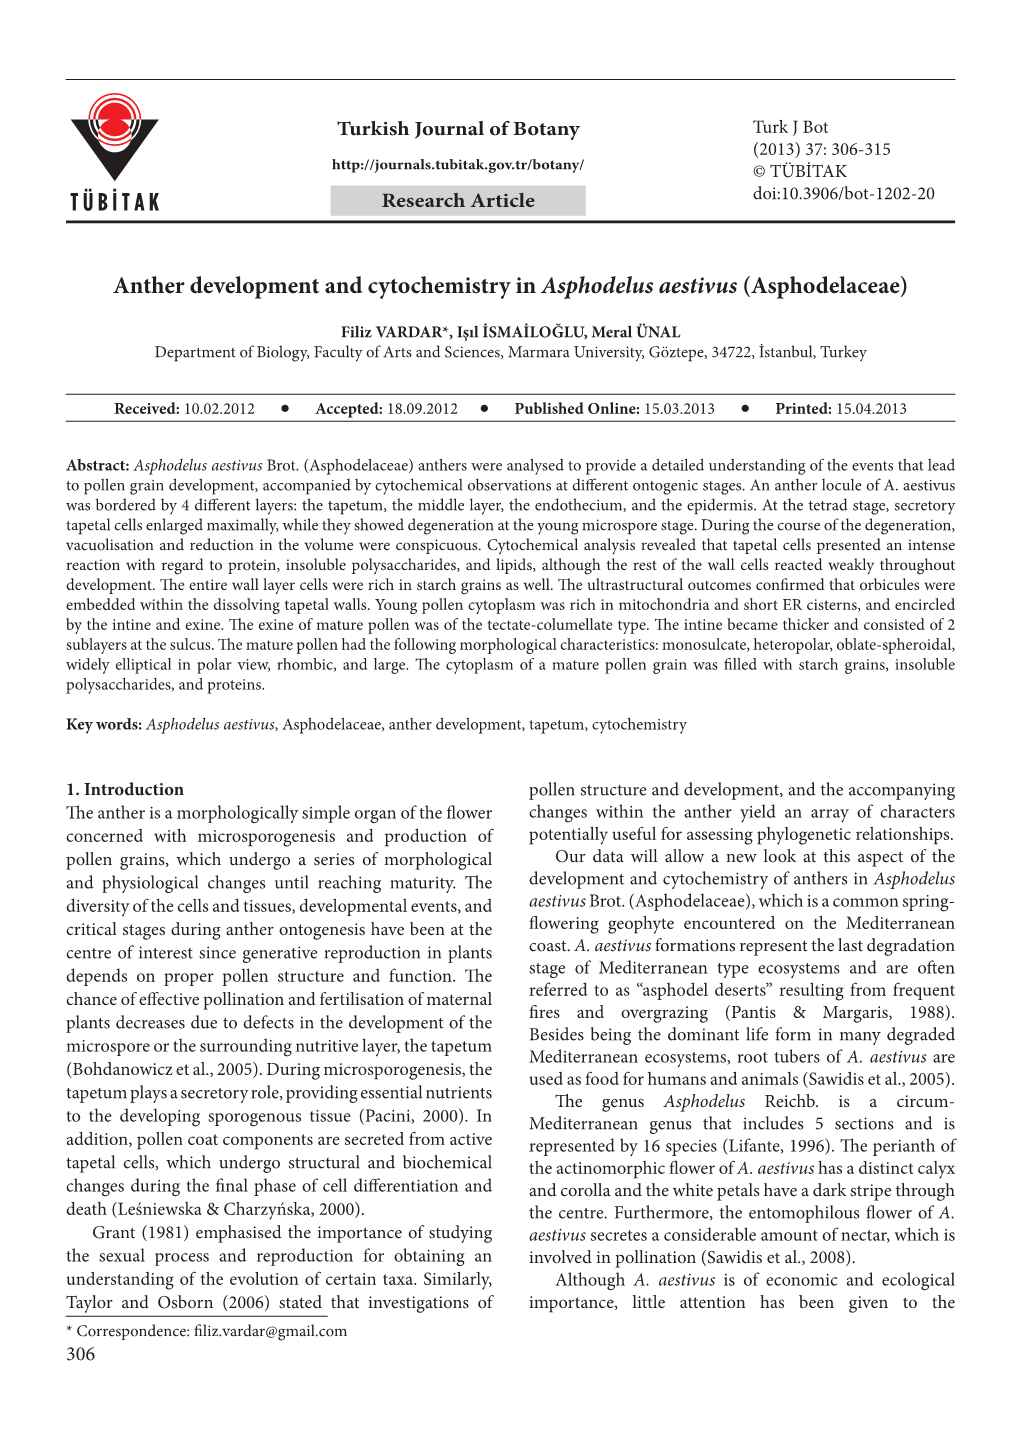 Anther Development and Cytochemistry in Asphodelus Aestivus (Asphodelaceae)